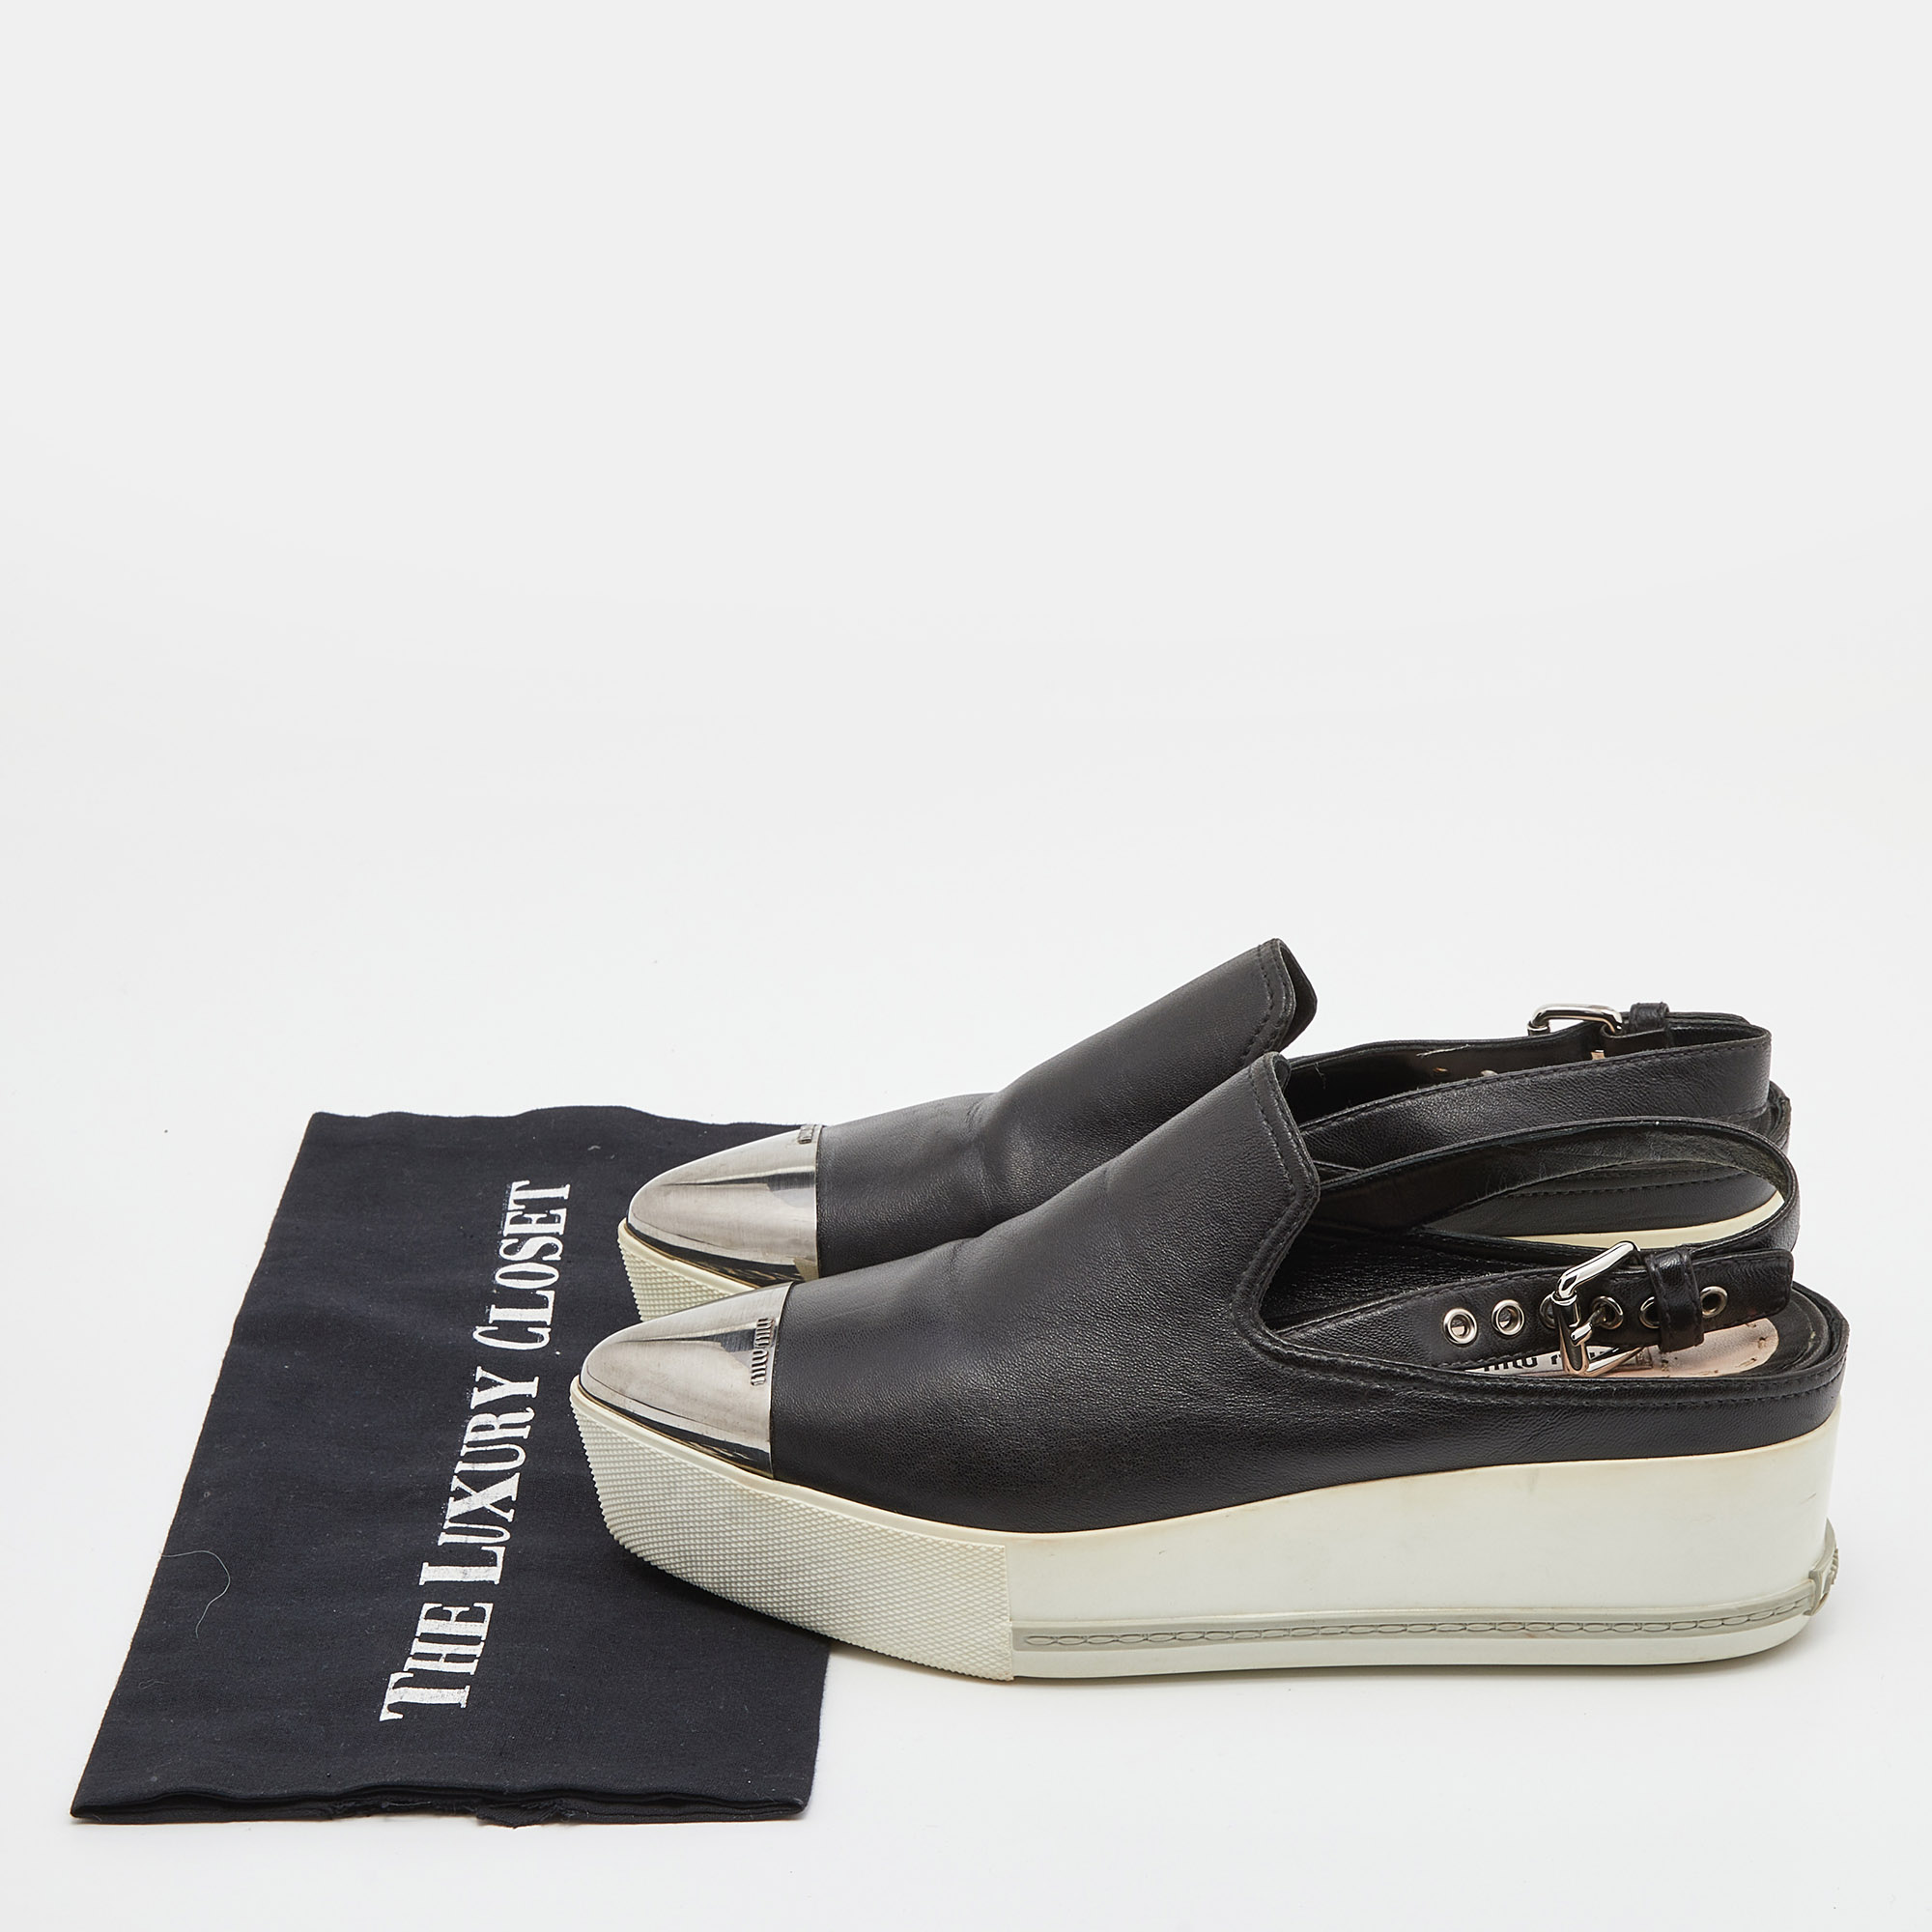 Miu Miu Black Leather Platform Slingback Sneakers Size 39